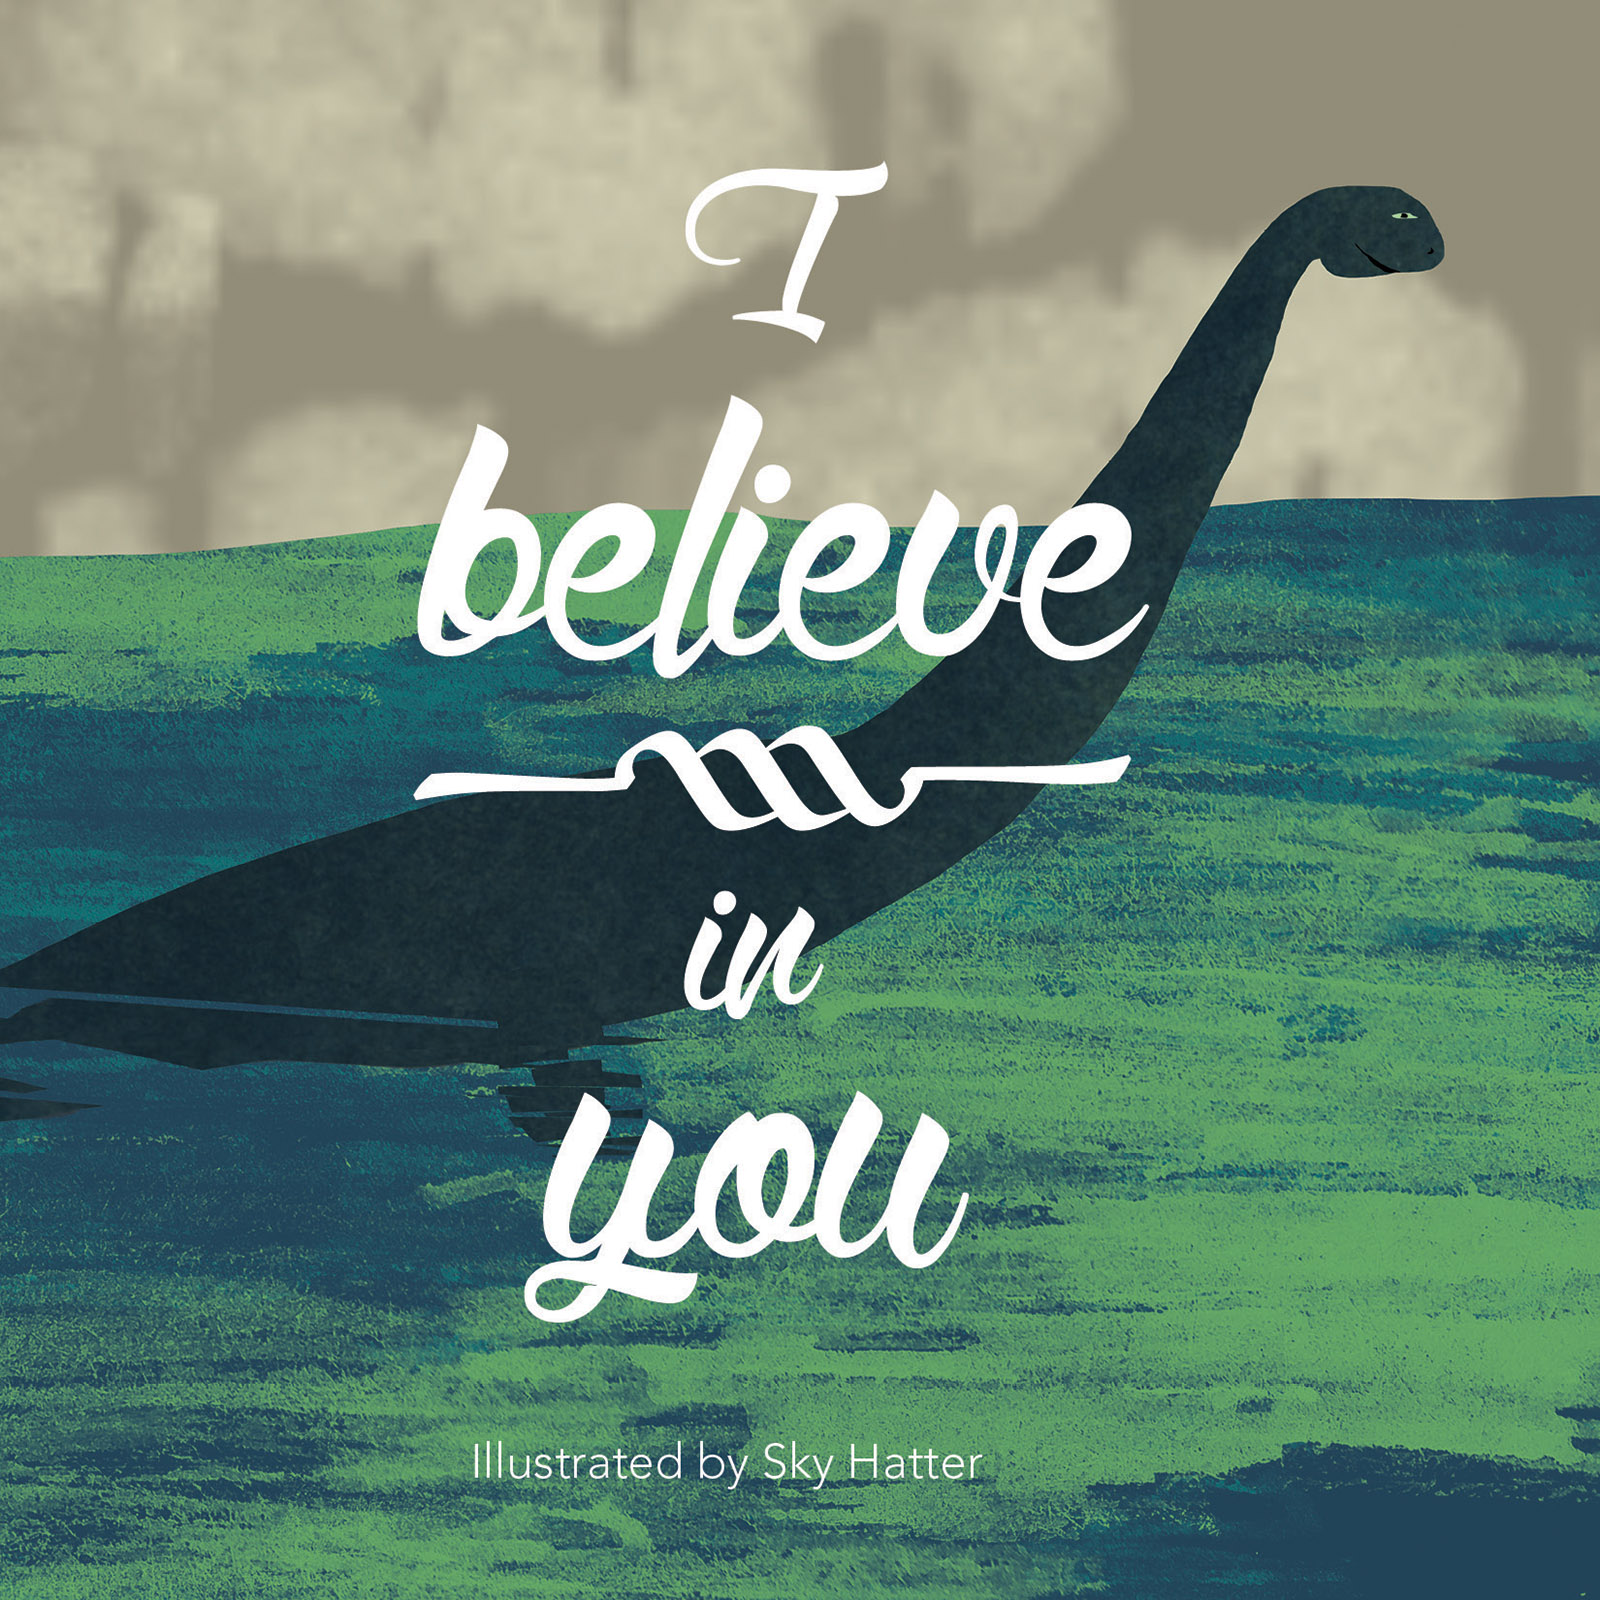 Believe tonight. Believe me. I believe in you. I believe in you картинки. Believe in you обложка.